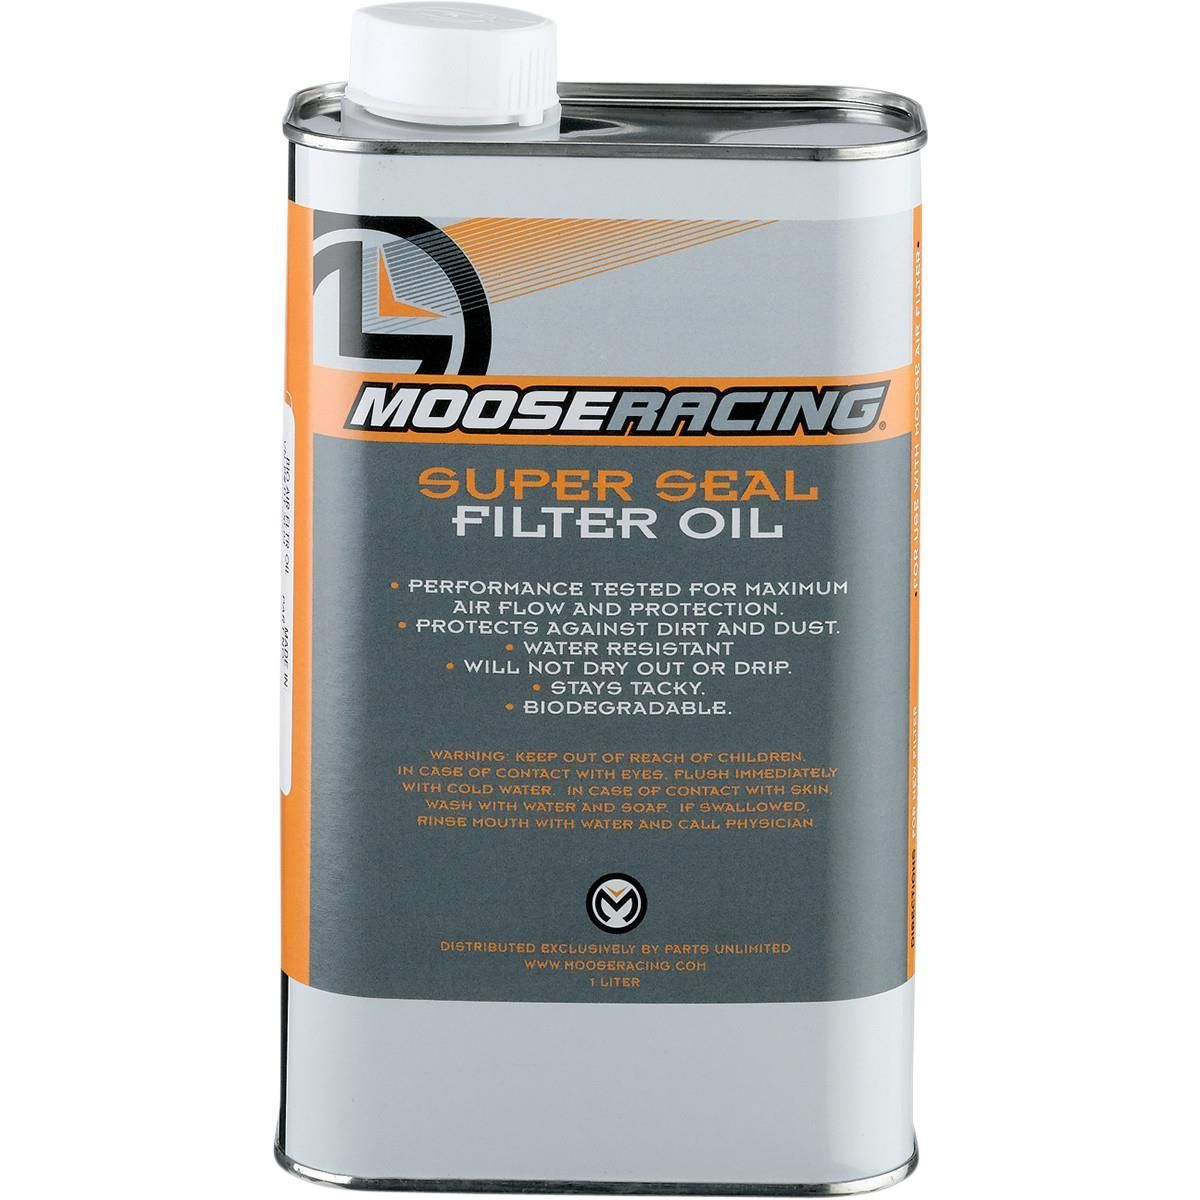 2X86-MOOSE-RACIN-36100007 Super Seal Filter Oil